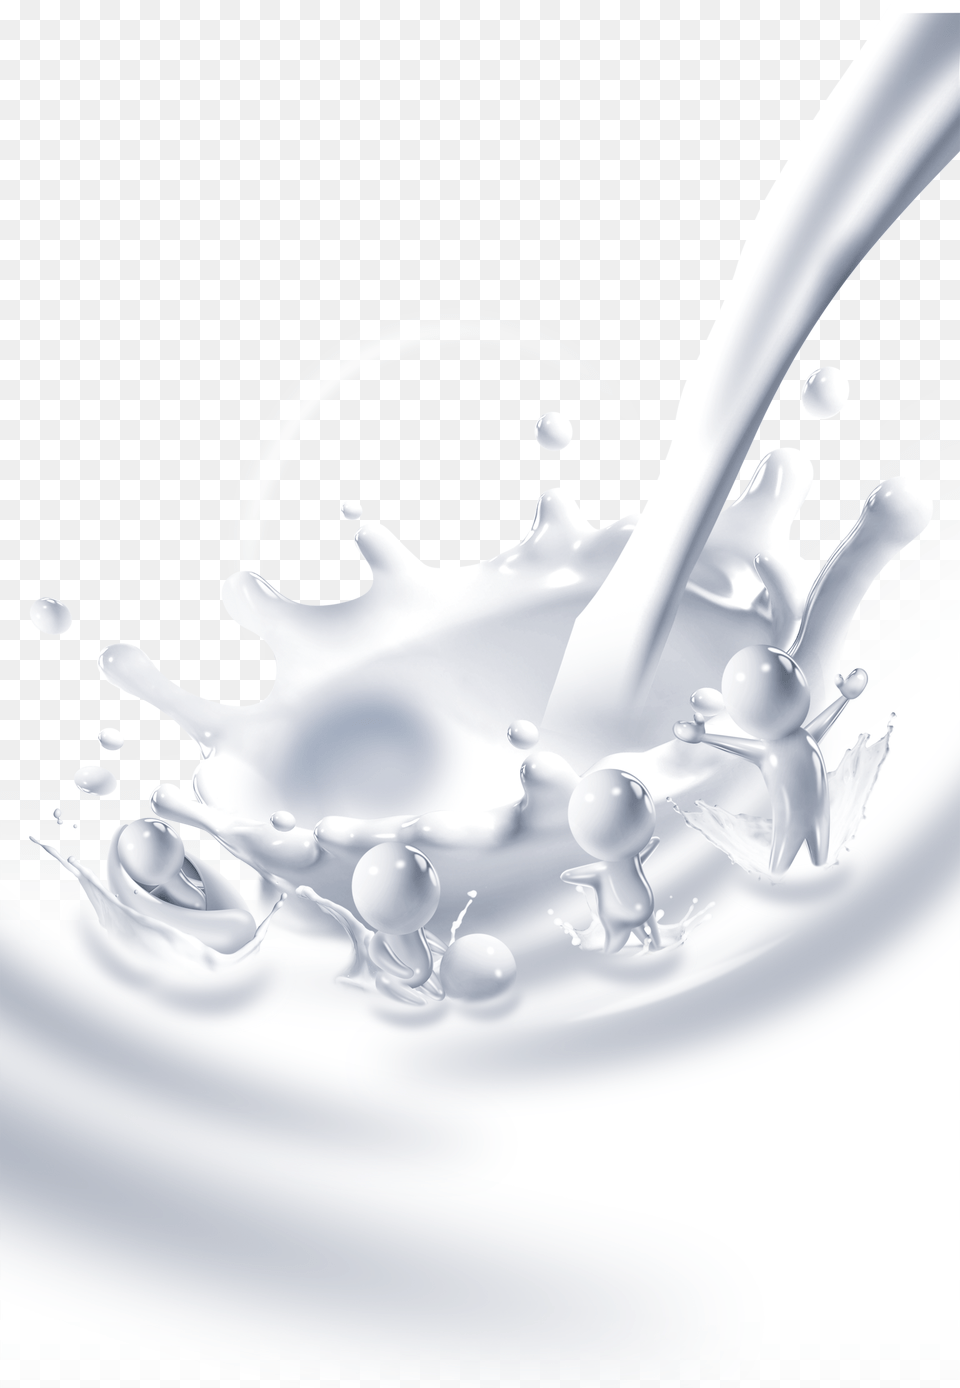 Svg Milk Vector Flow Milk Splash, Beverage, Dairy, Food Free Png Download